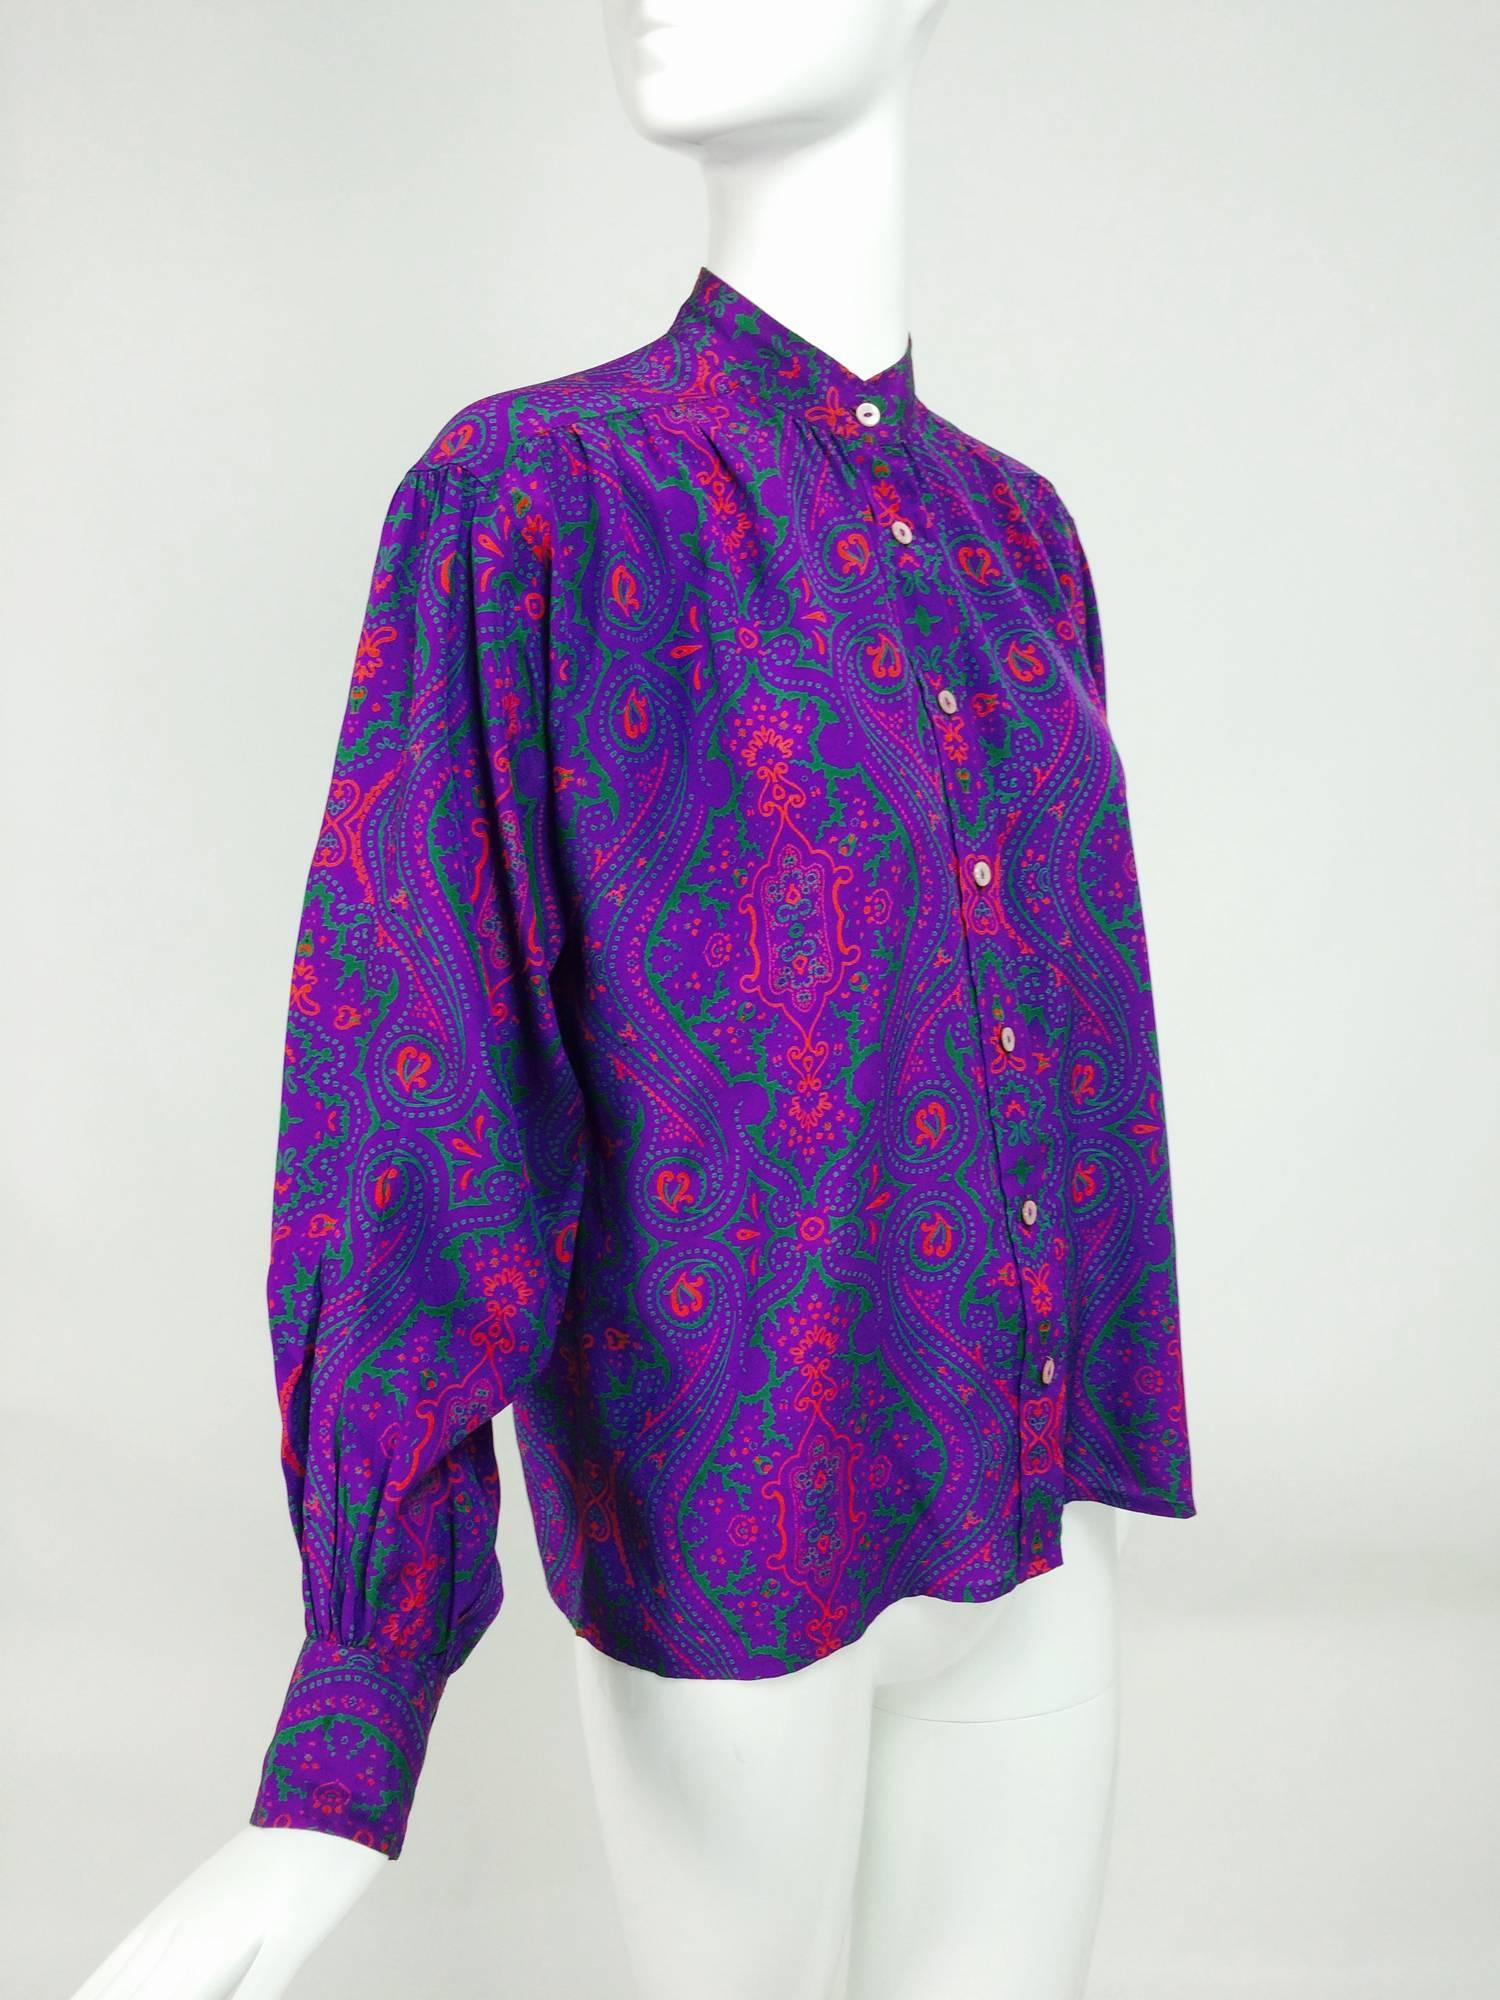 Yves Saint Laurent Moorish print silk blouse 1970s  38 1